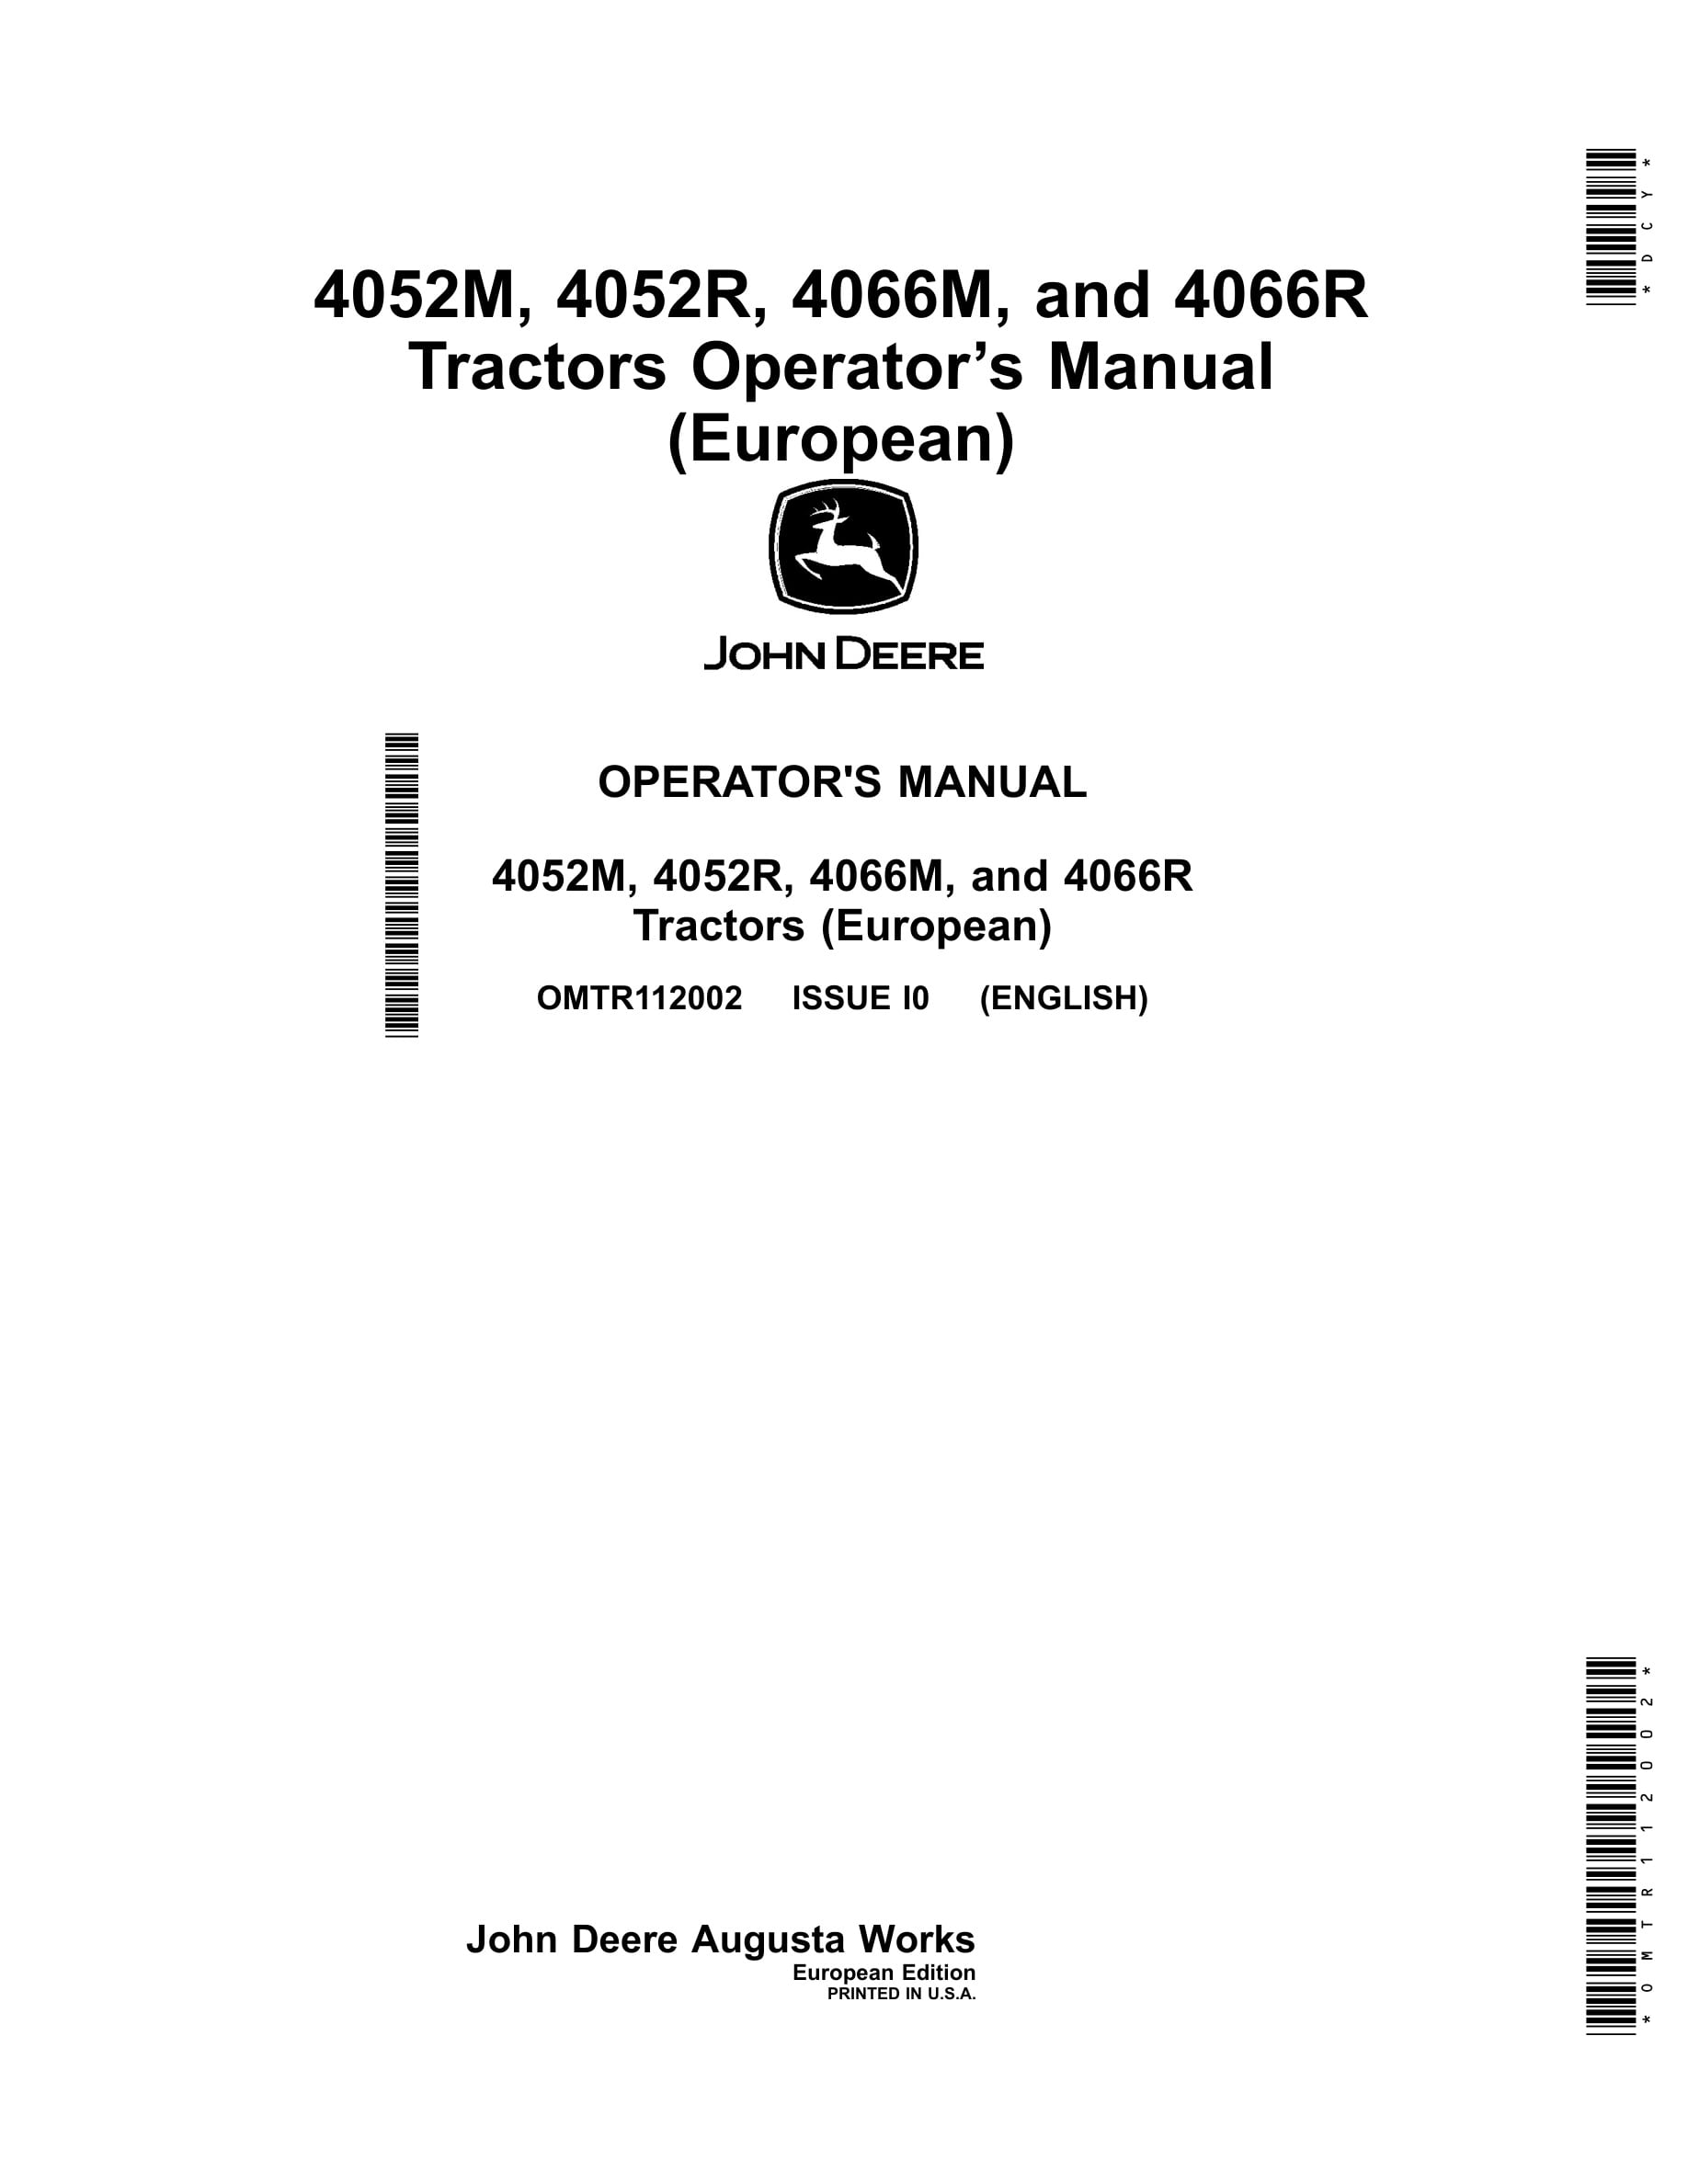 John Deere 4052m, 4052r, 4066m, And 4066r Tractors Operator Manuals OMTR112002-1